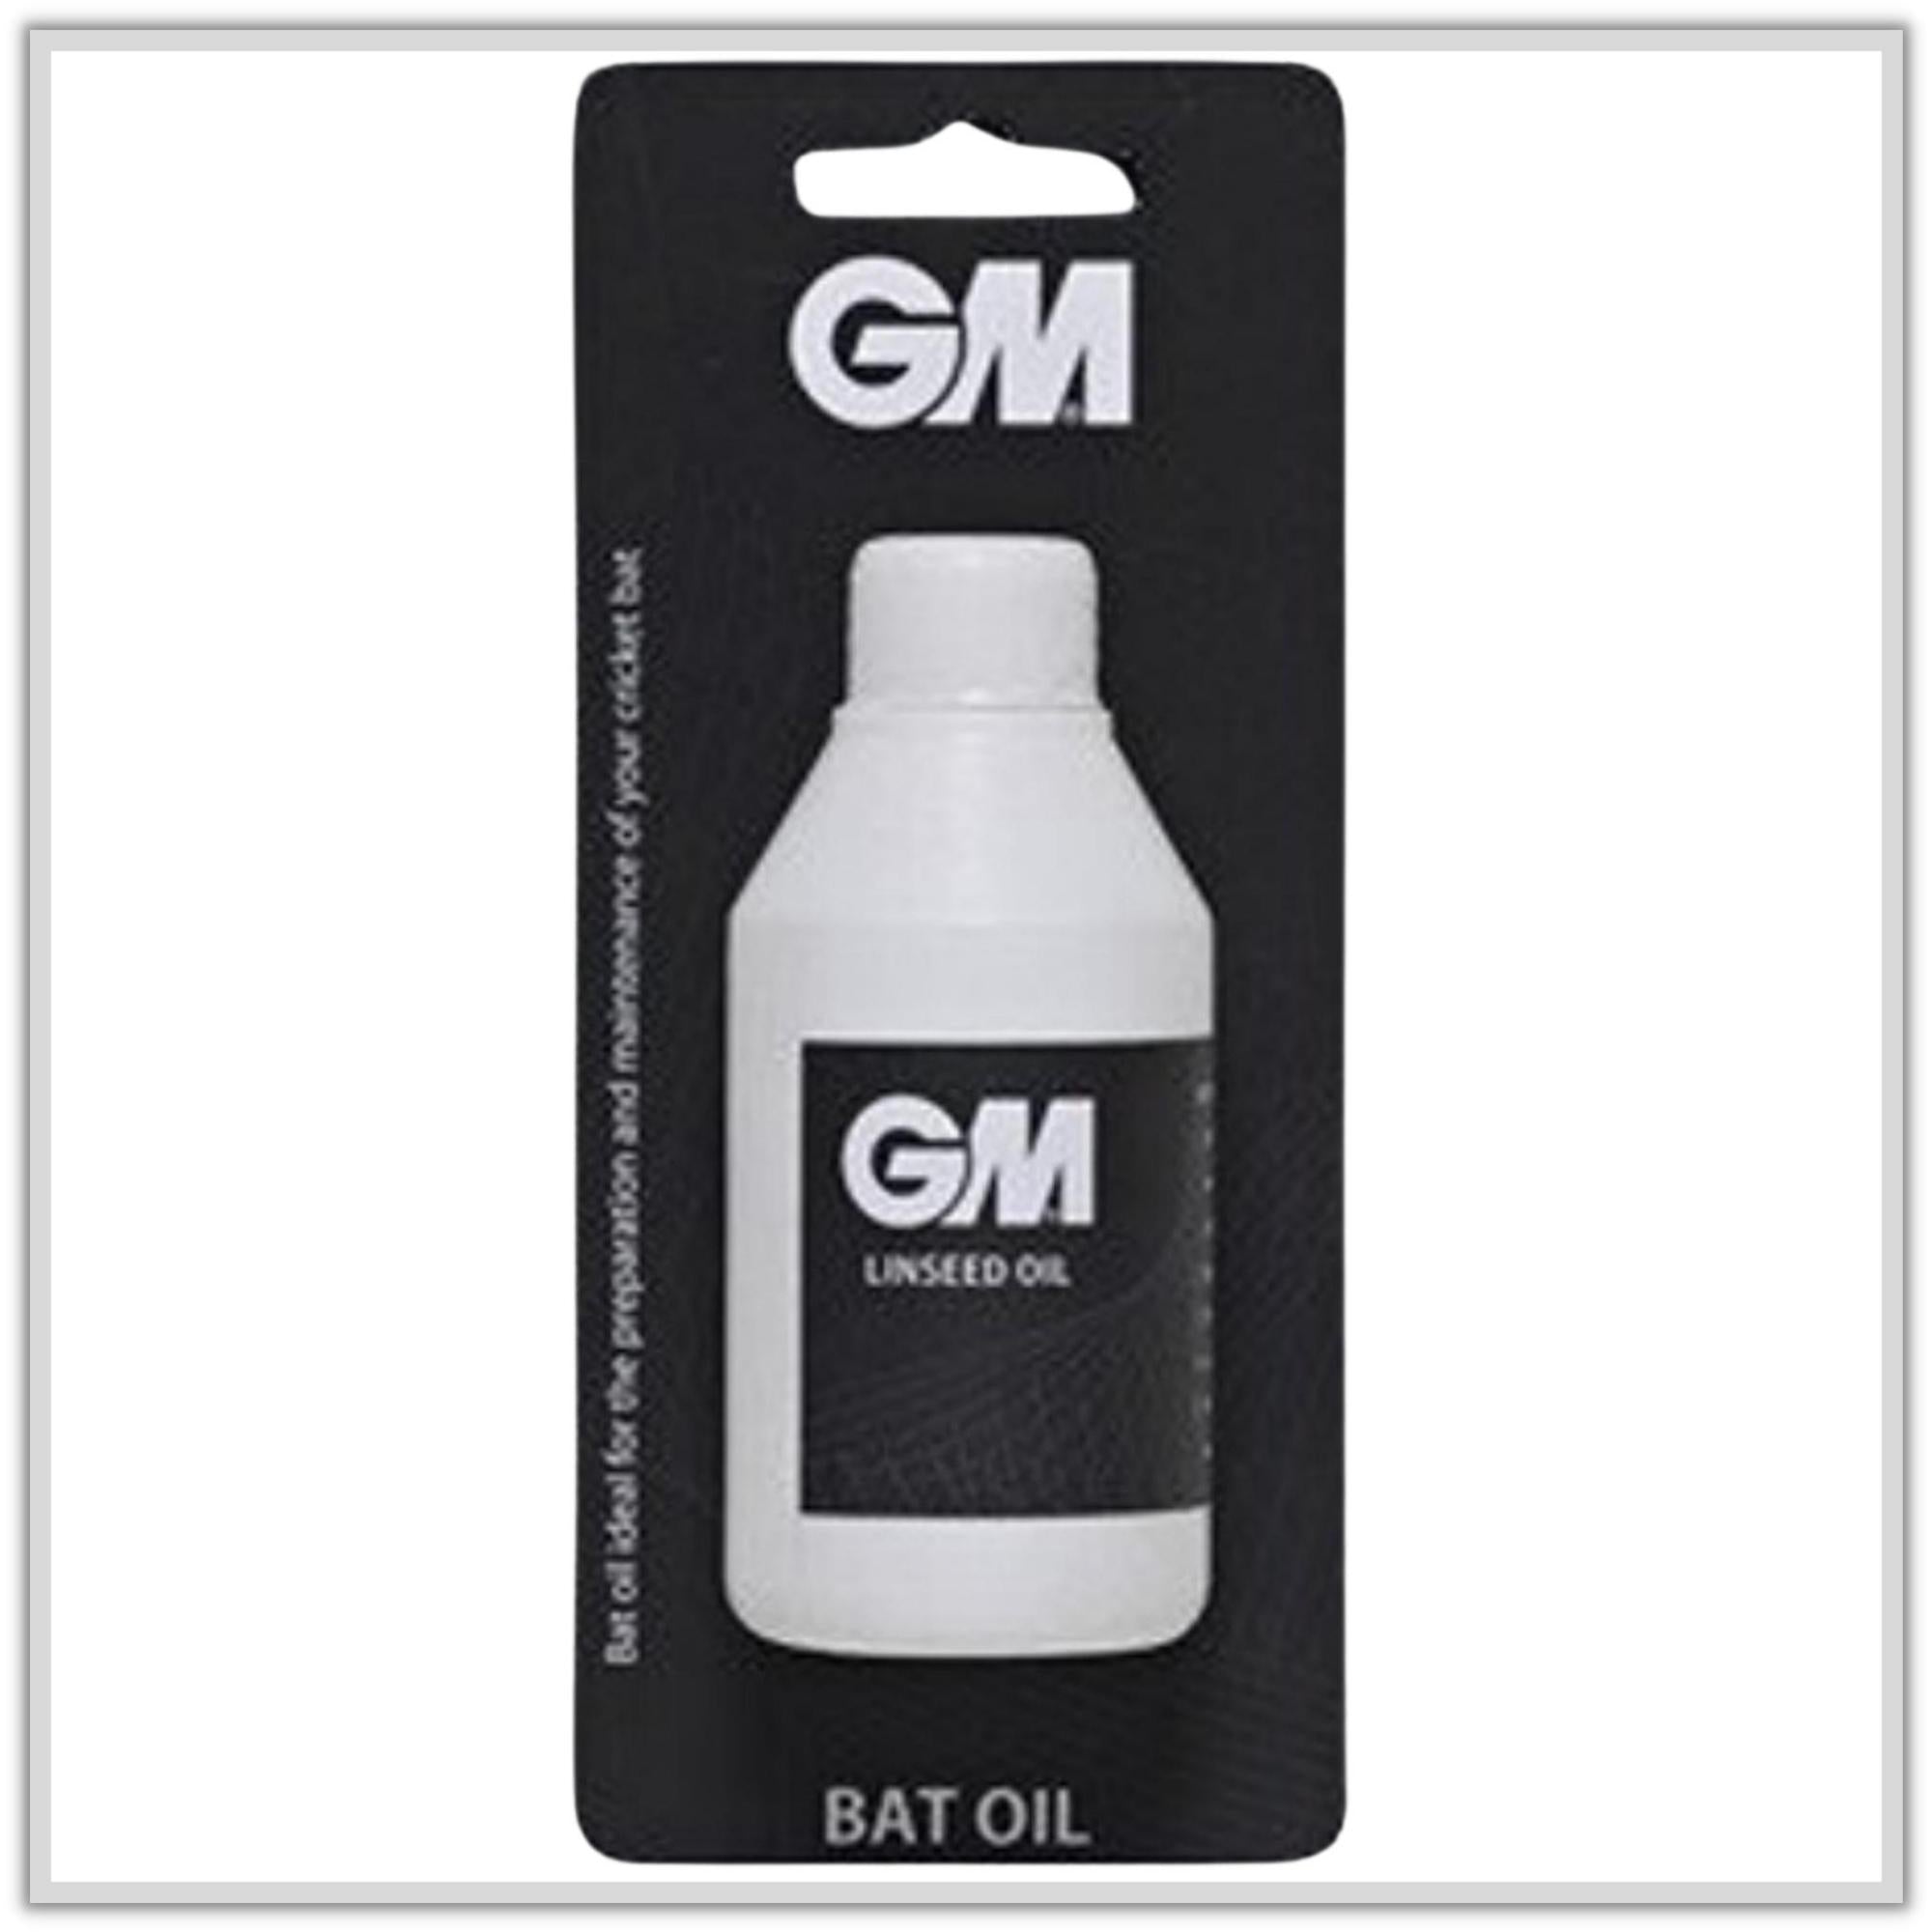 GM Linseed Natural Bat Oil